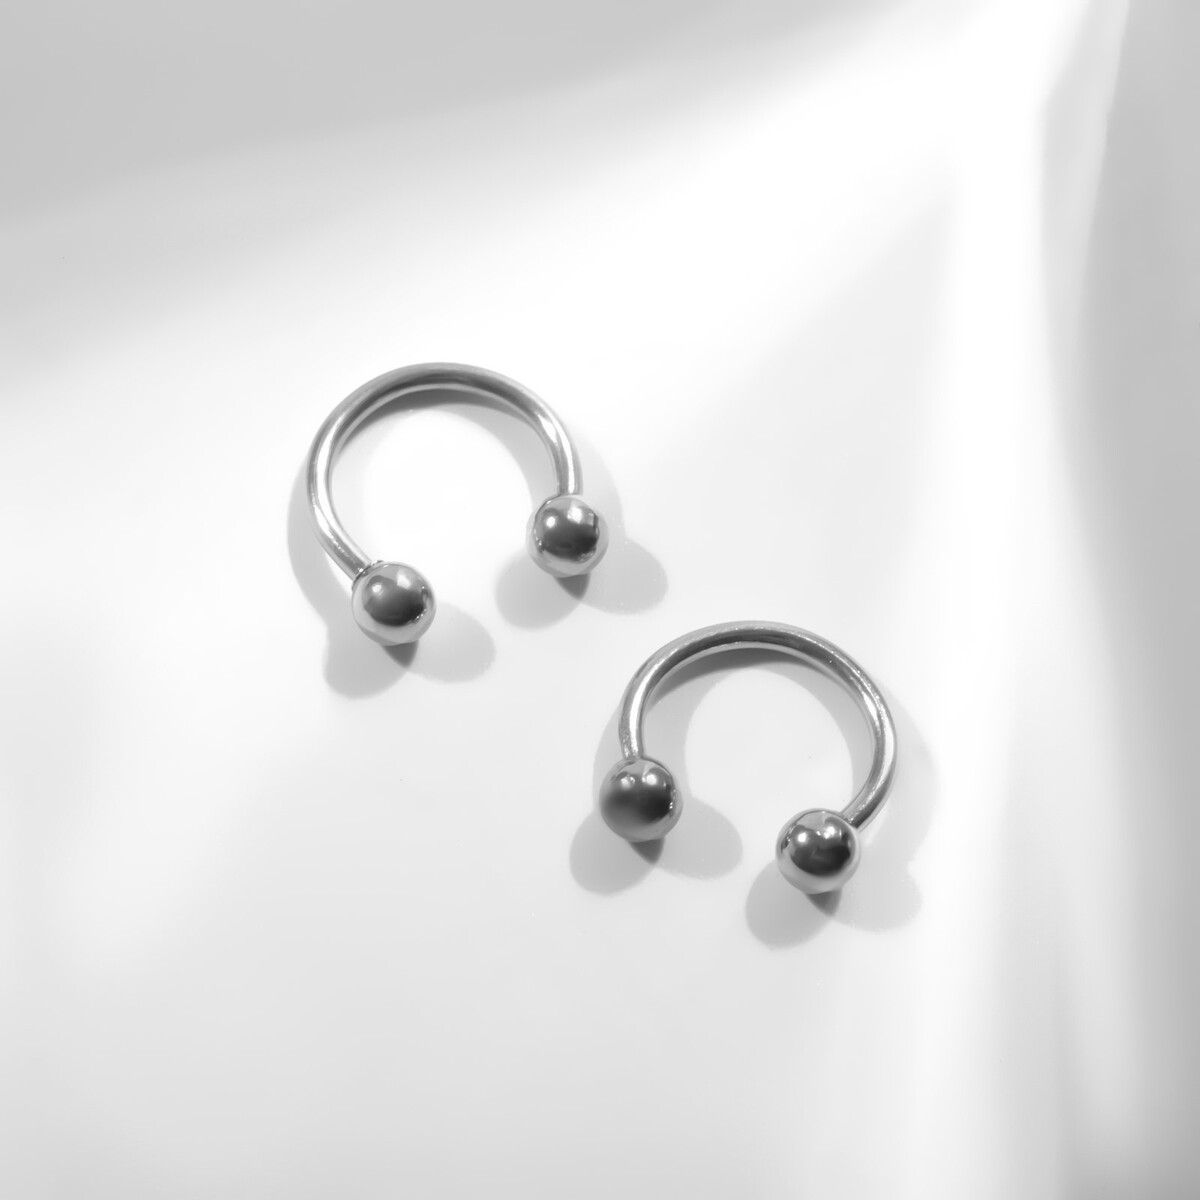 Циркуляр в бровь (пирсинг), шар, d=8 мм, пара, цвет серебро пирсинг в ухо кольцо космонавт d 13мм серебро